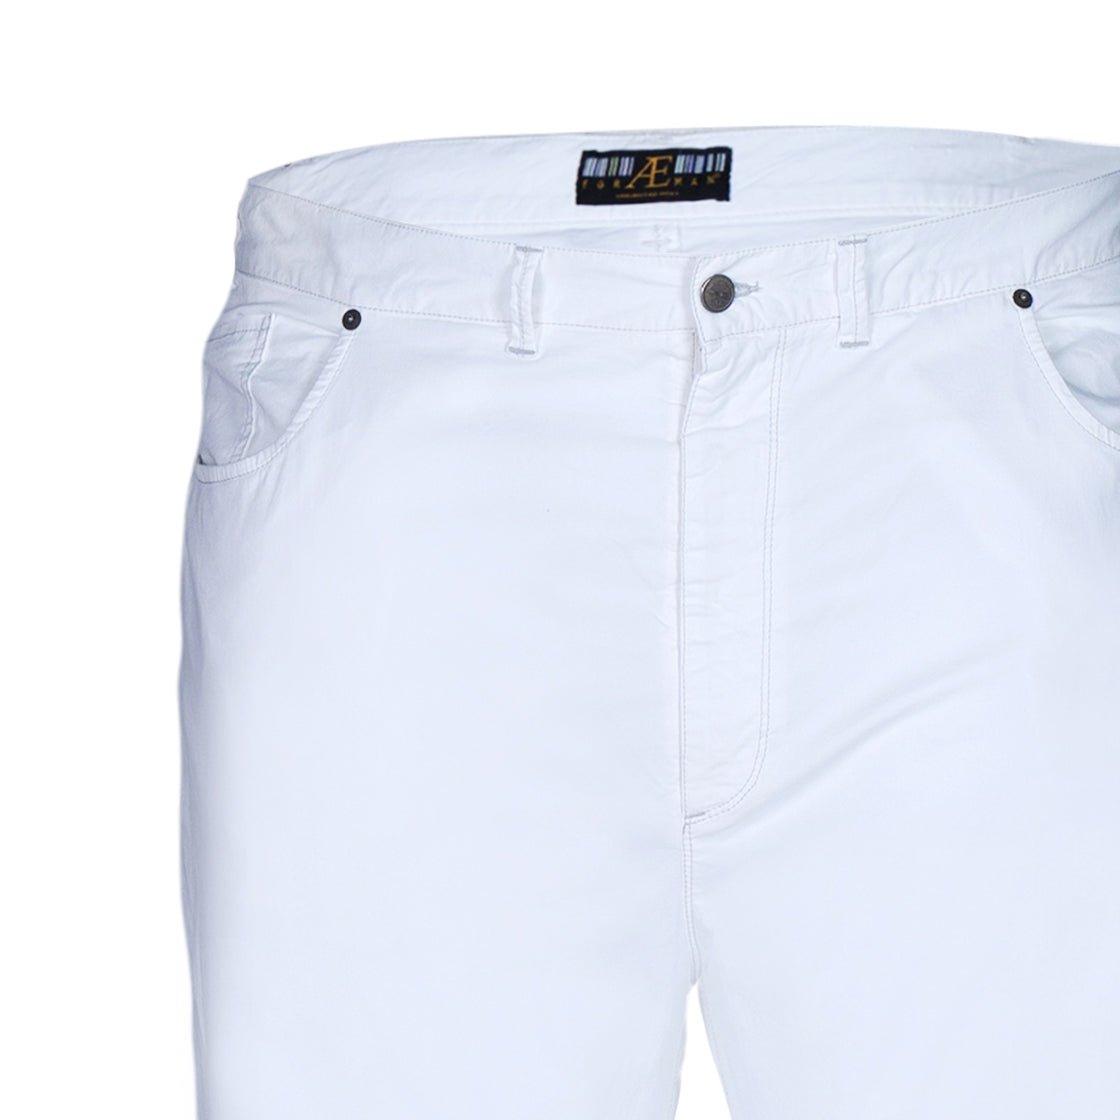 AE Z KIRS Straight Leg Cotton Pants White Closeup